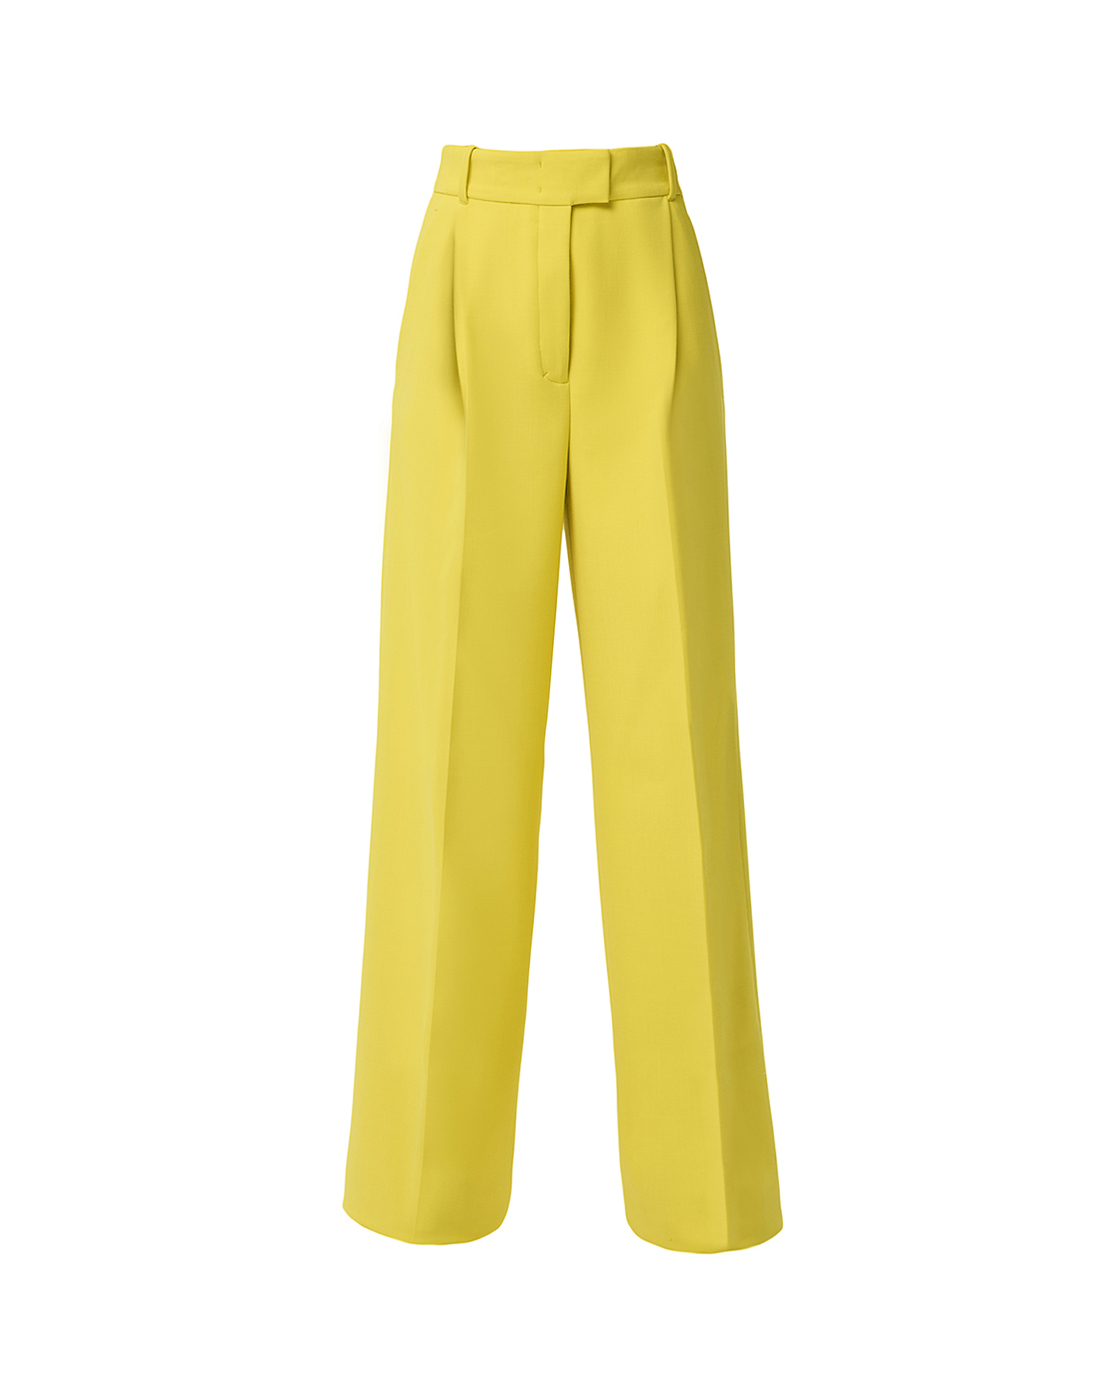 Женские желтые брюки Dorothee Schumacher S940403/231-1